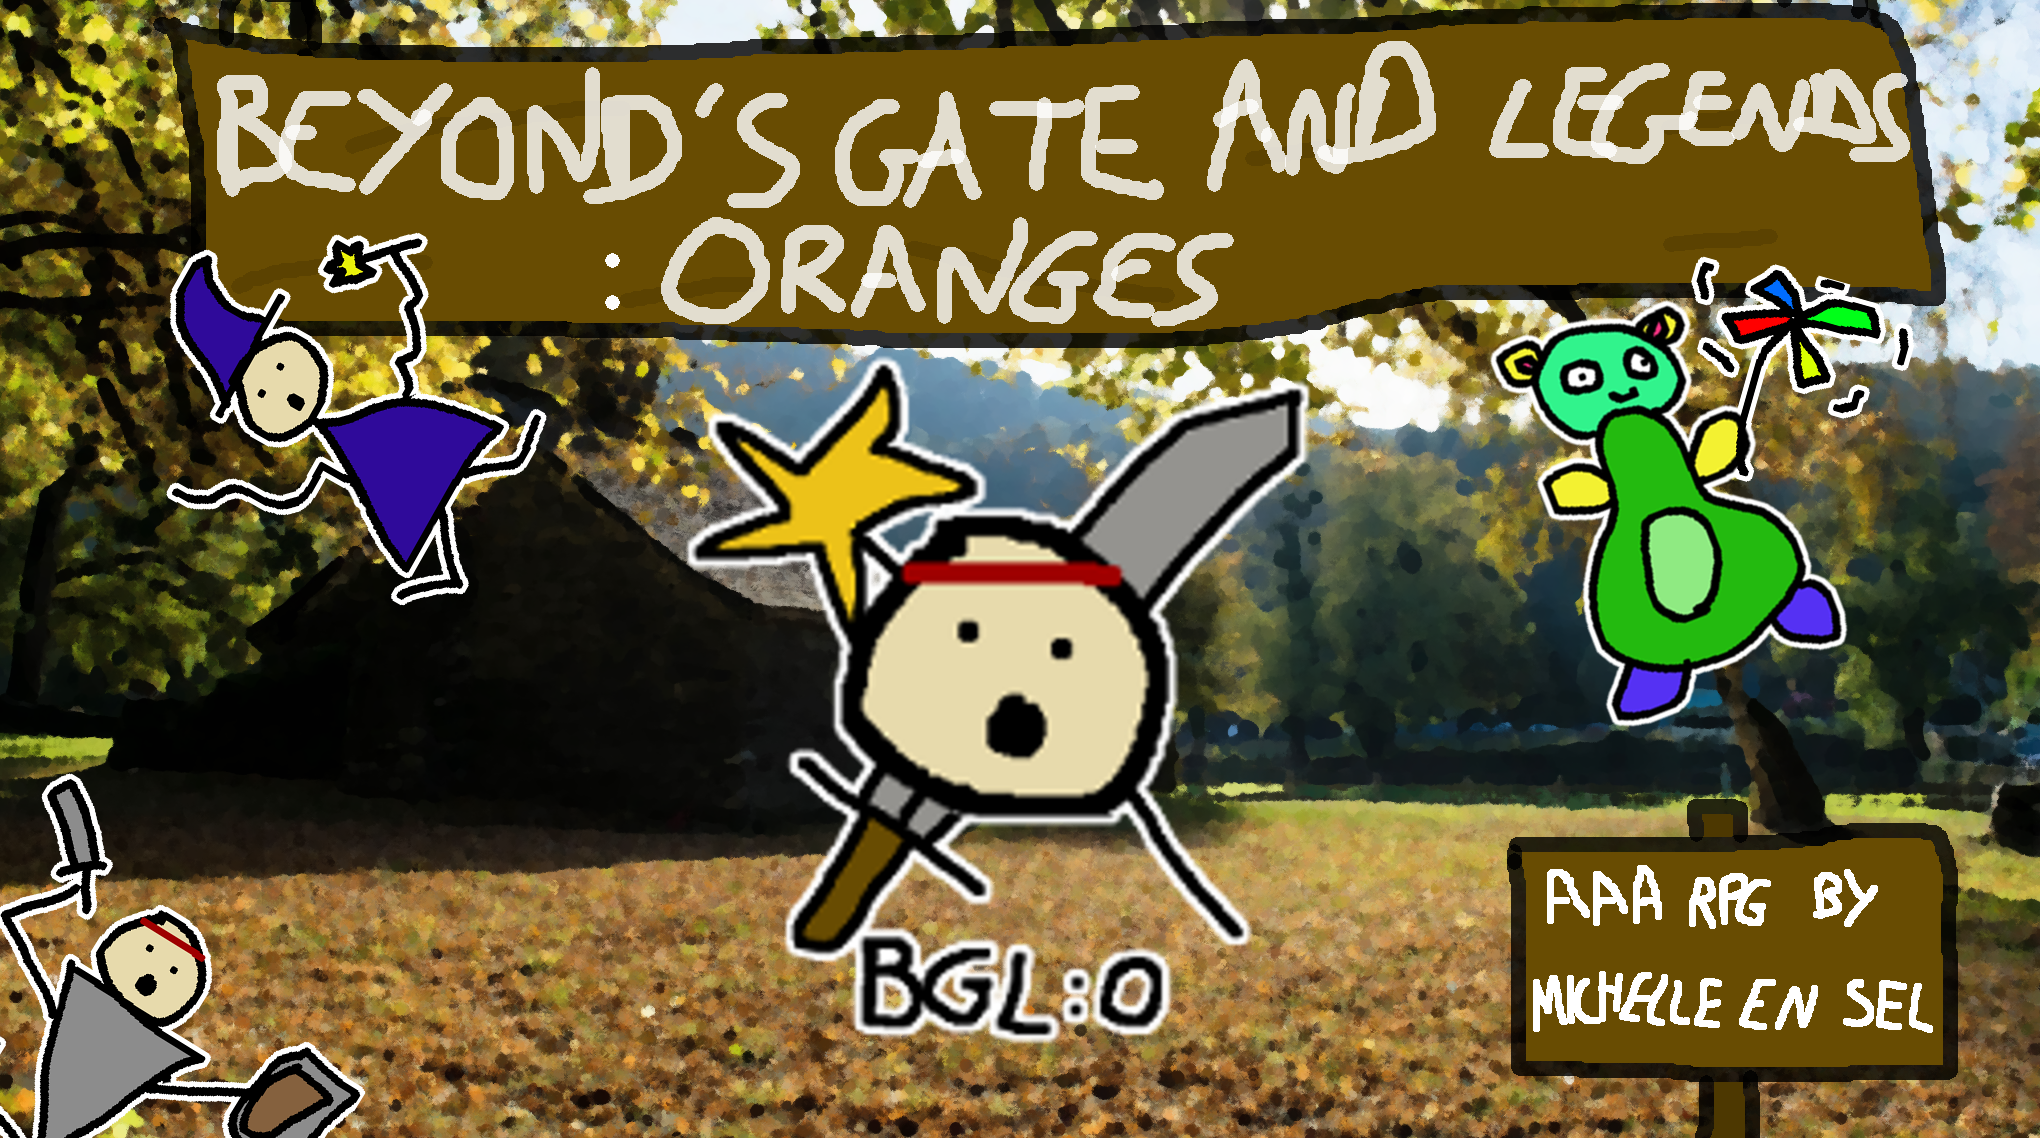 Biyond's Gate and Legends : Oranges